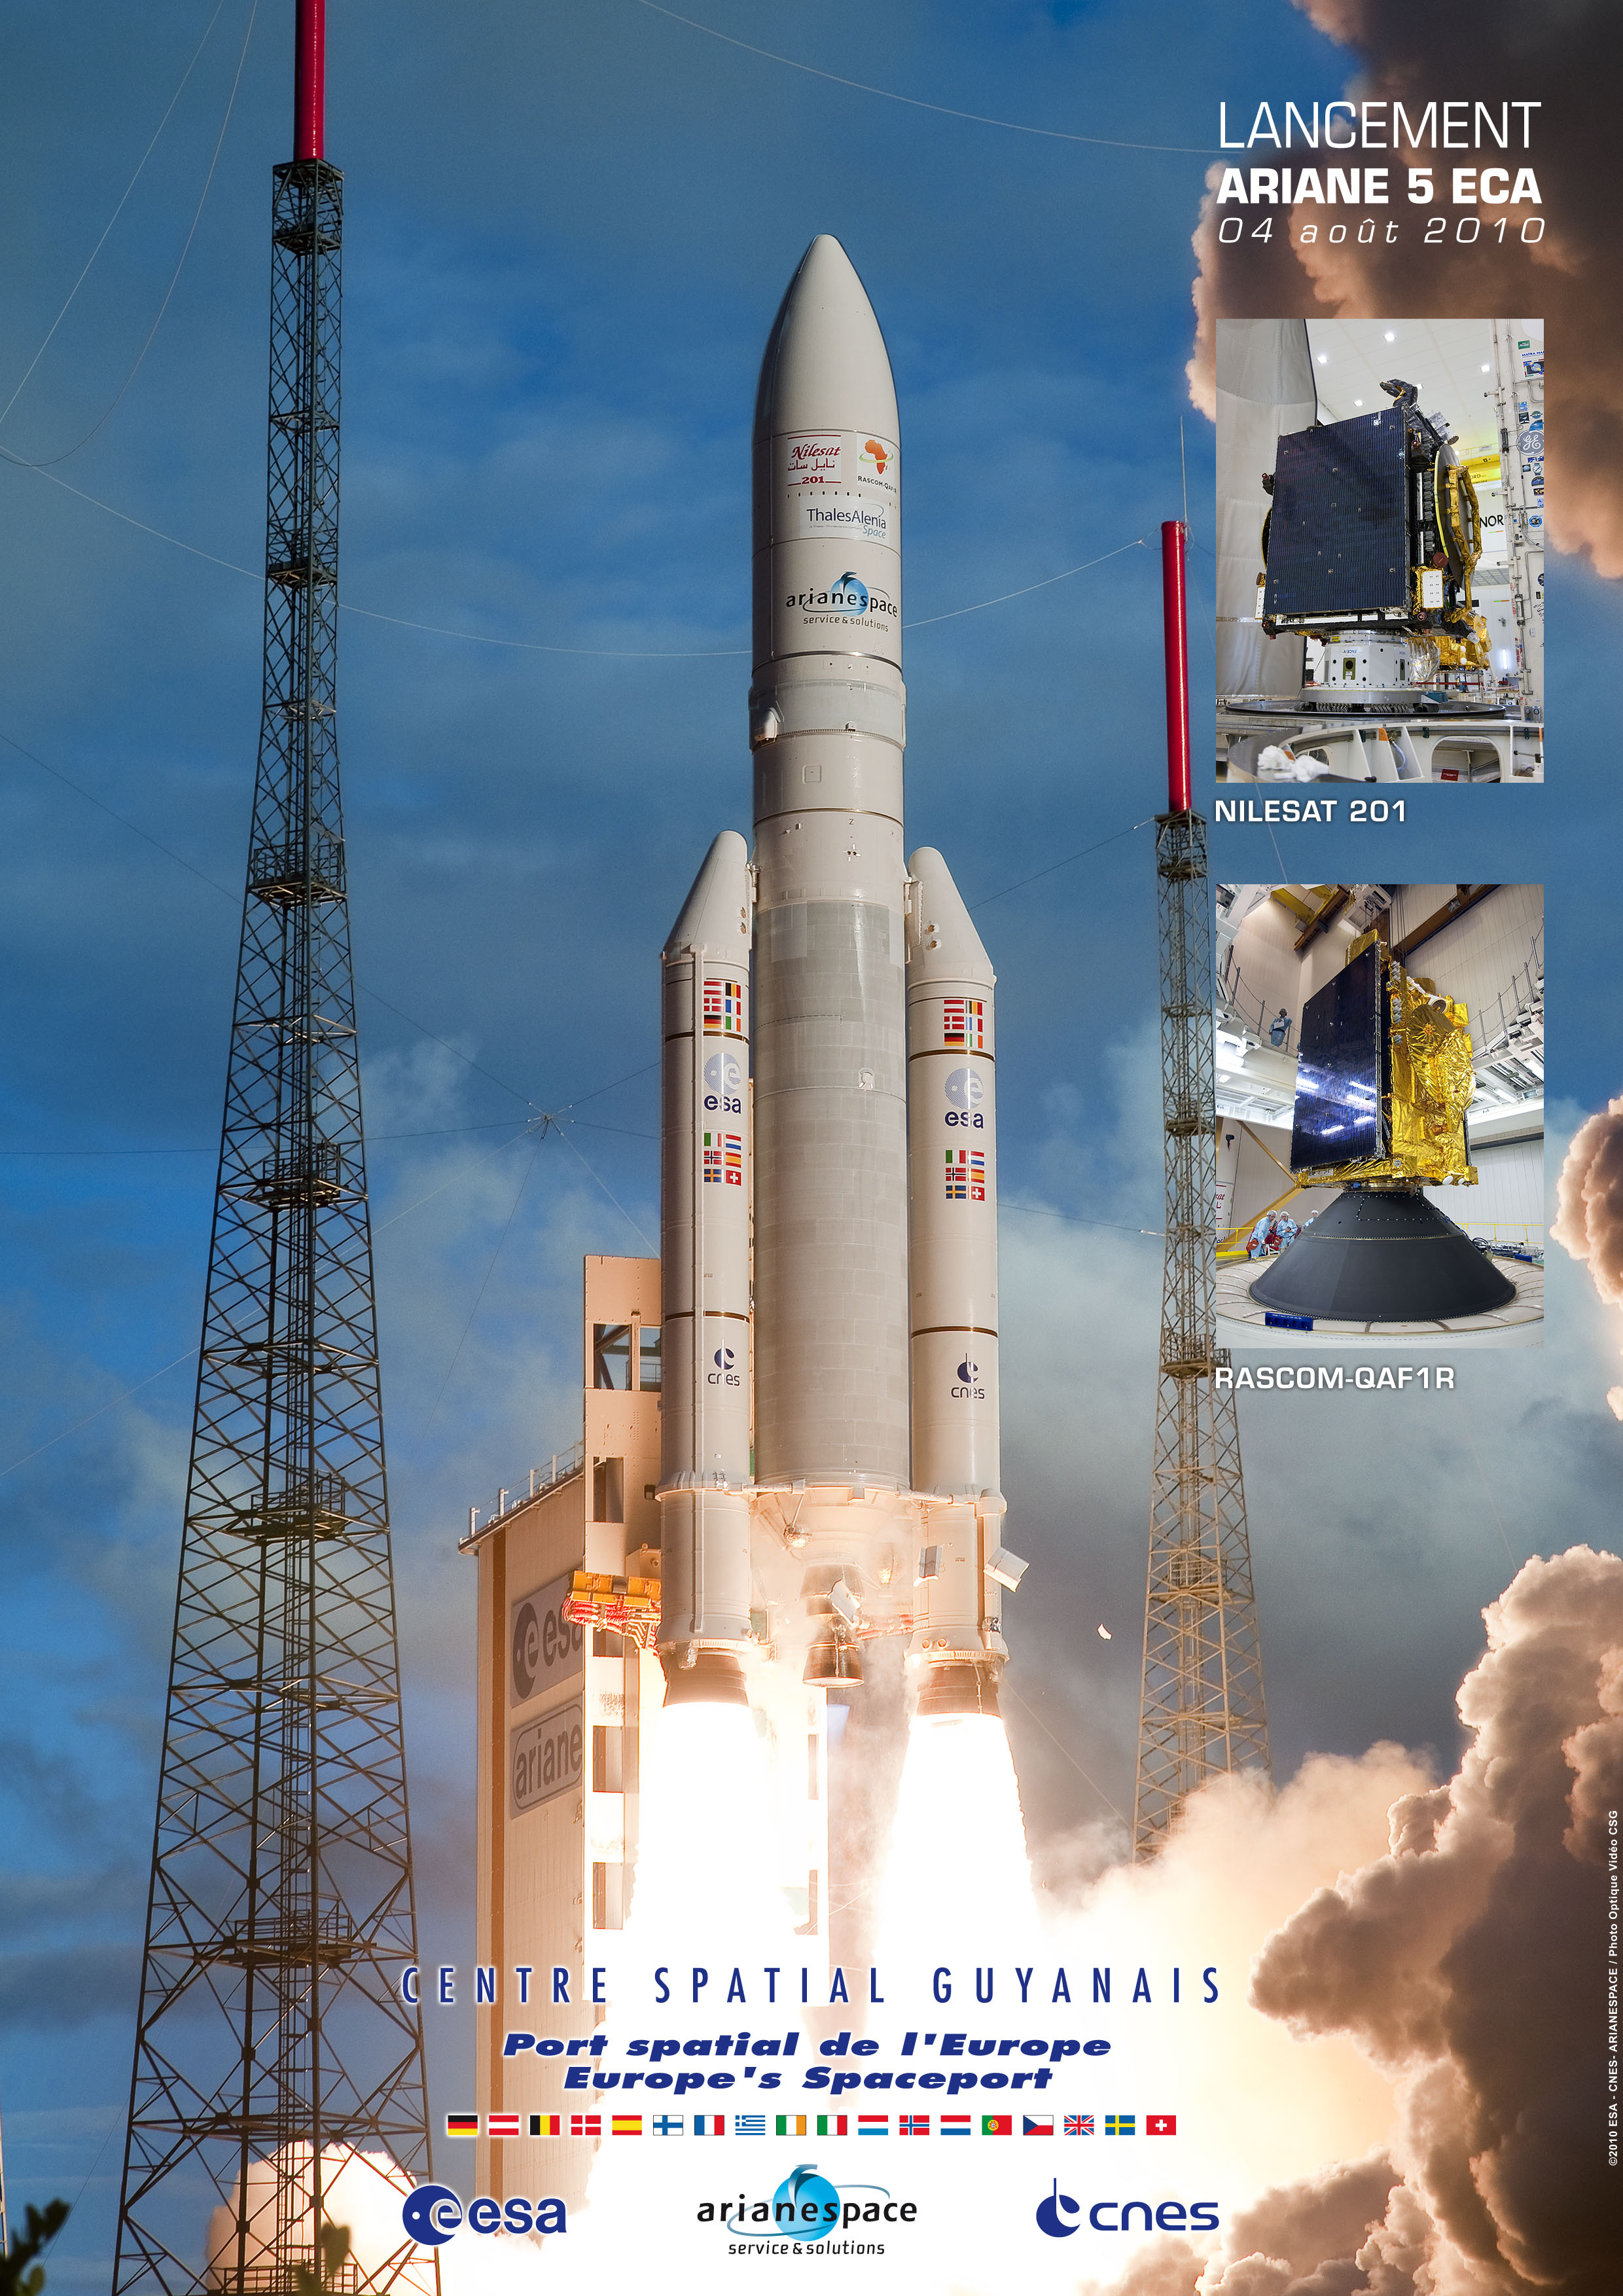 Launch of Ariane 5 ECA mission with NileSat 201 and Rascom-Qaf1R satellites, August 4, 2010.